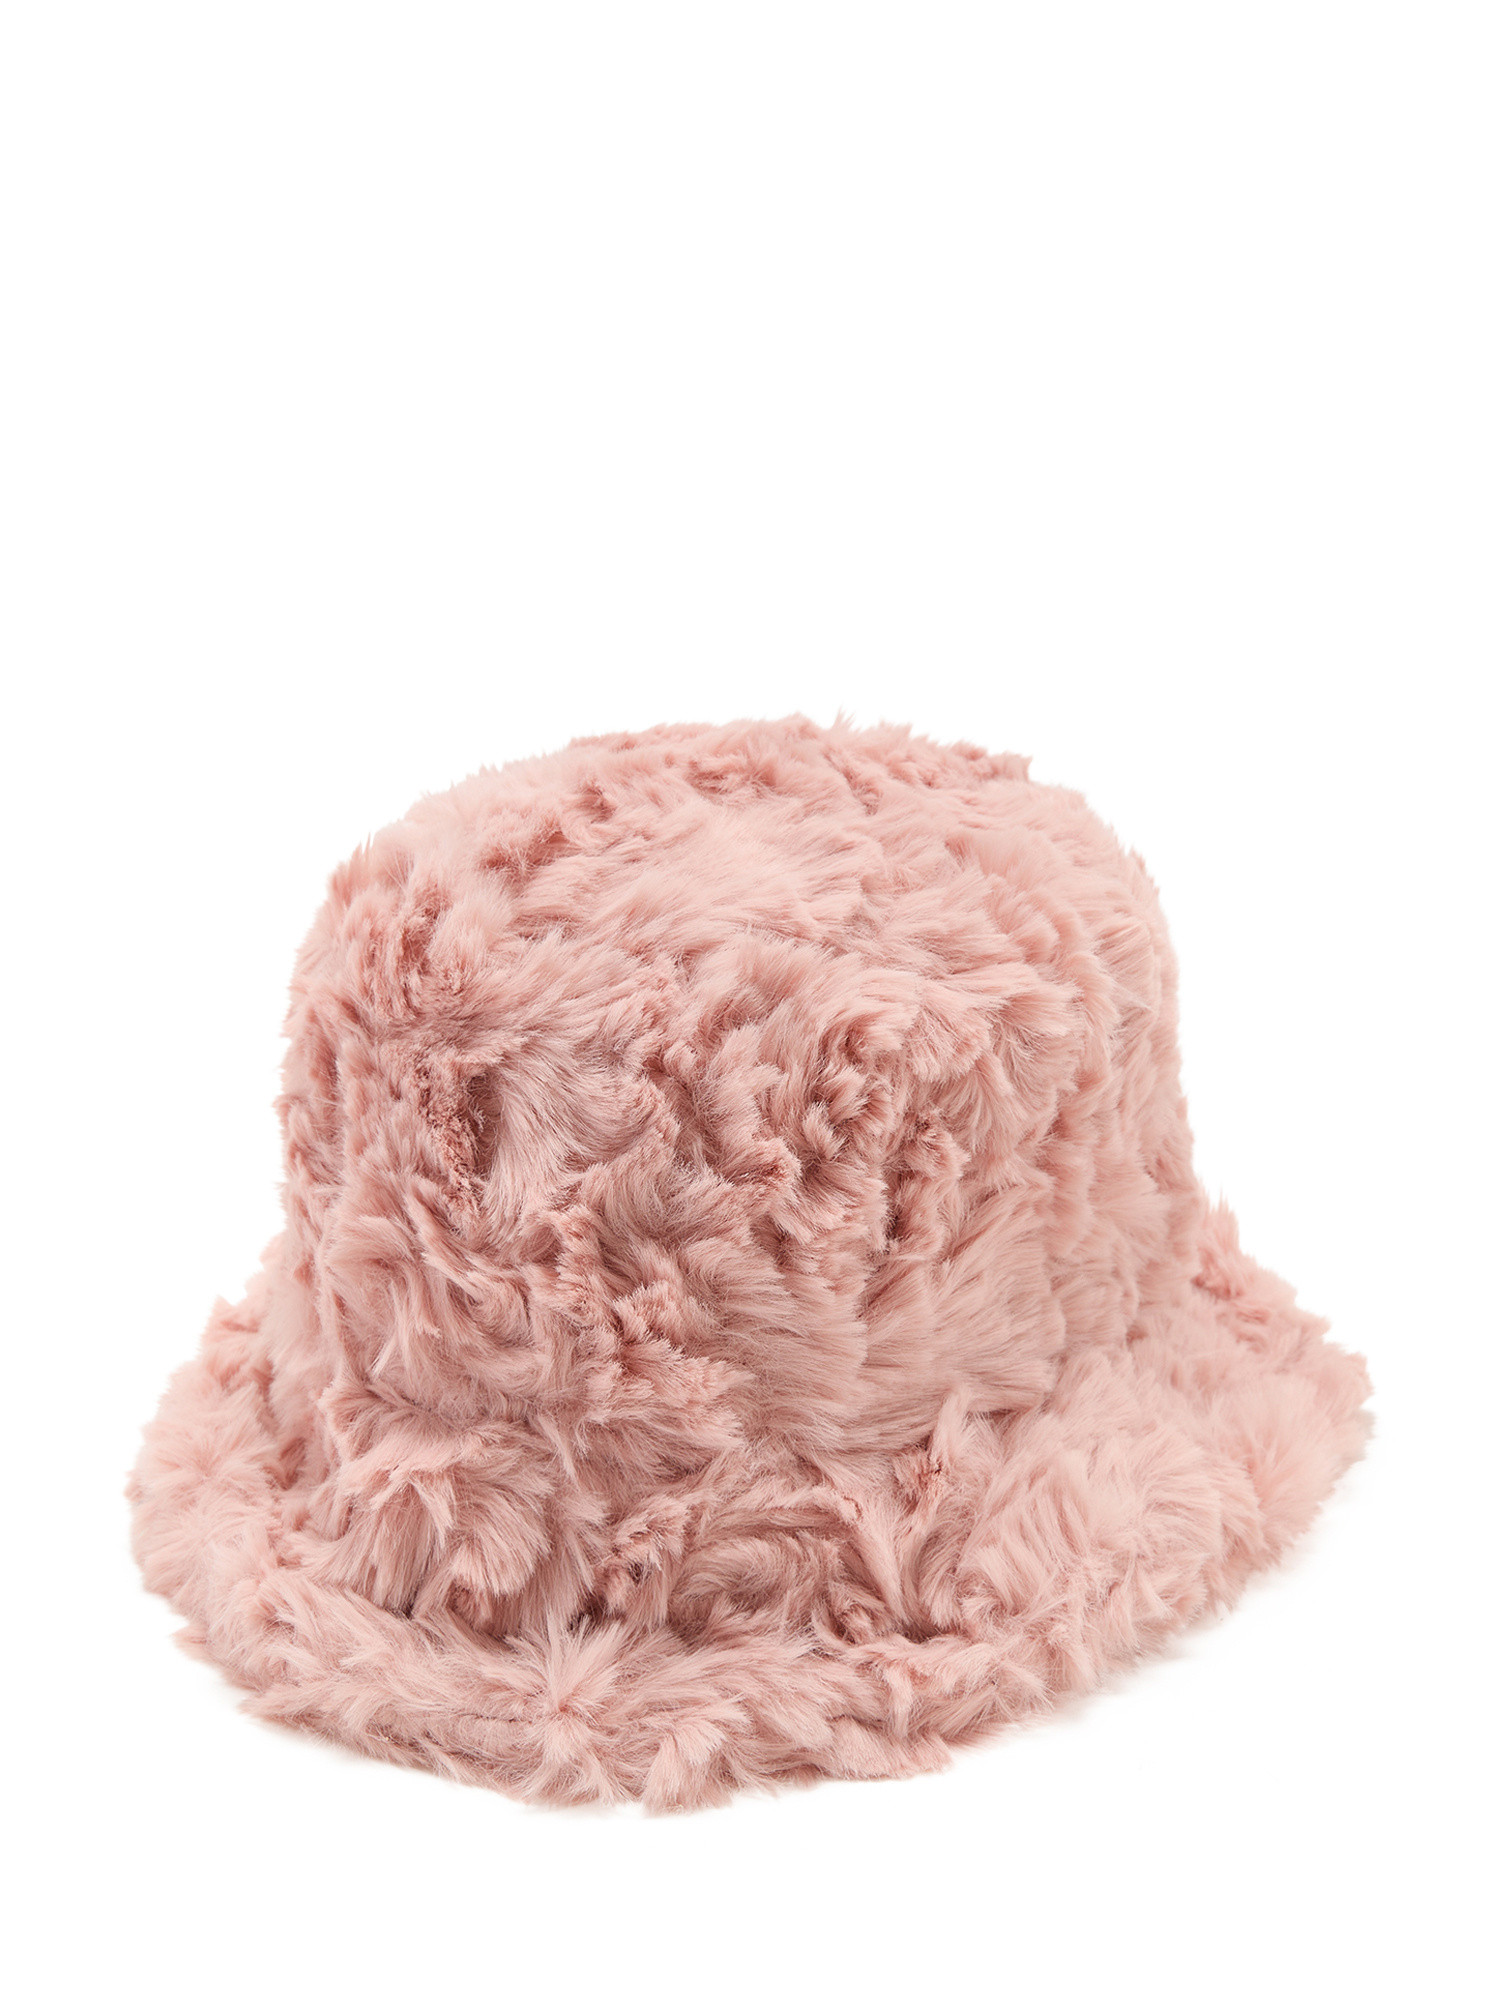 Koan - Cappello cloche in eco pelliccia, Rosa, large image number 0